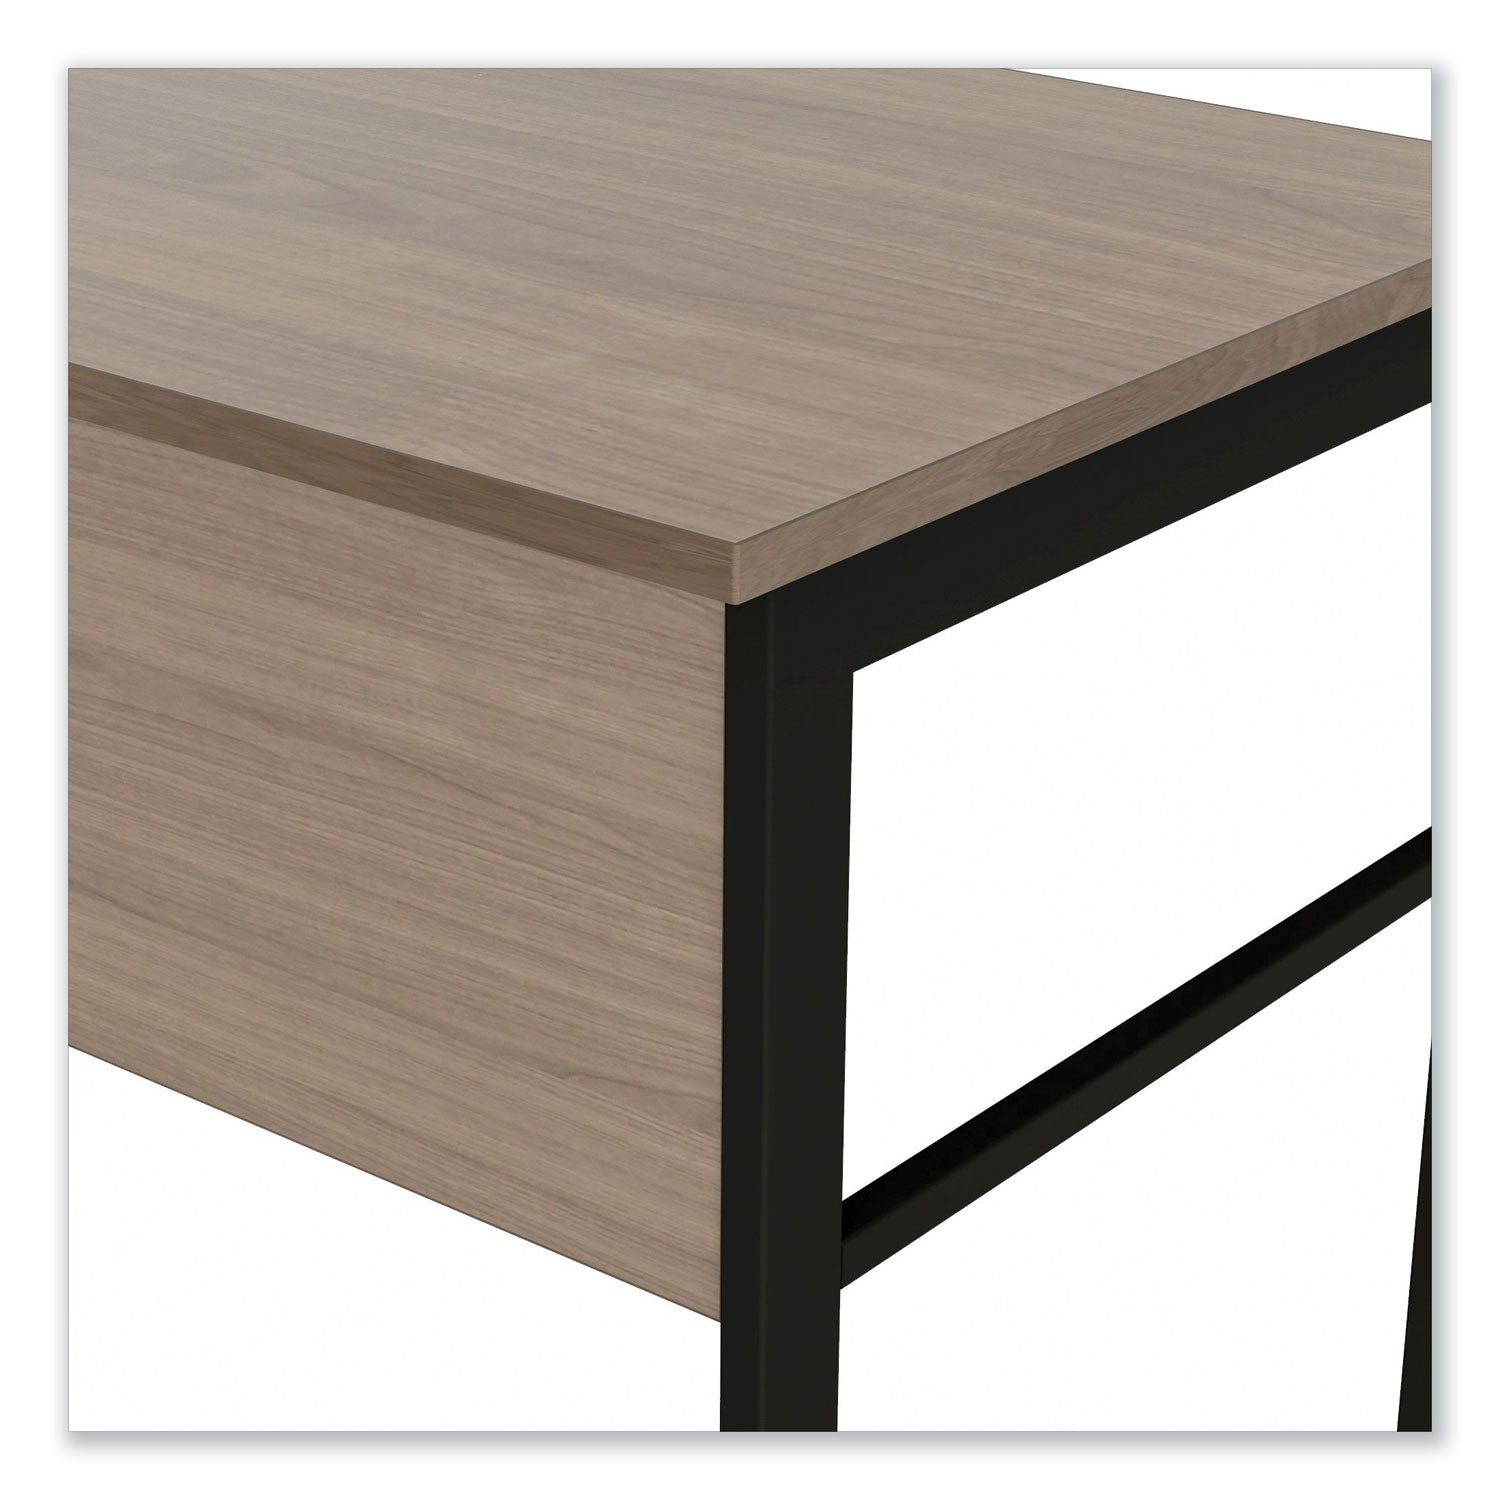 urban-series-desk-workstation-4725-x-2375-x-295-natural-walnut_litur600nw - 8